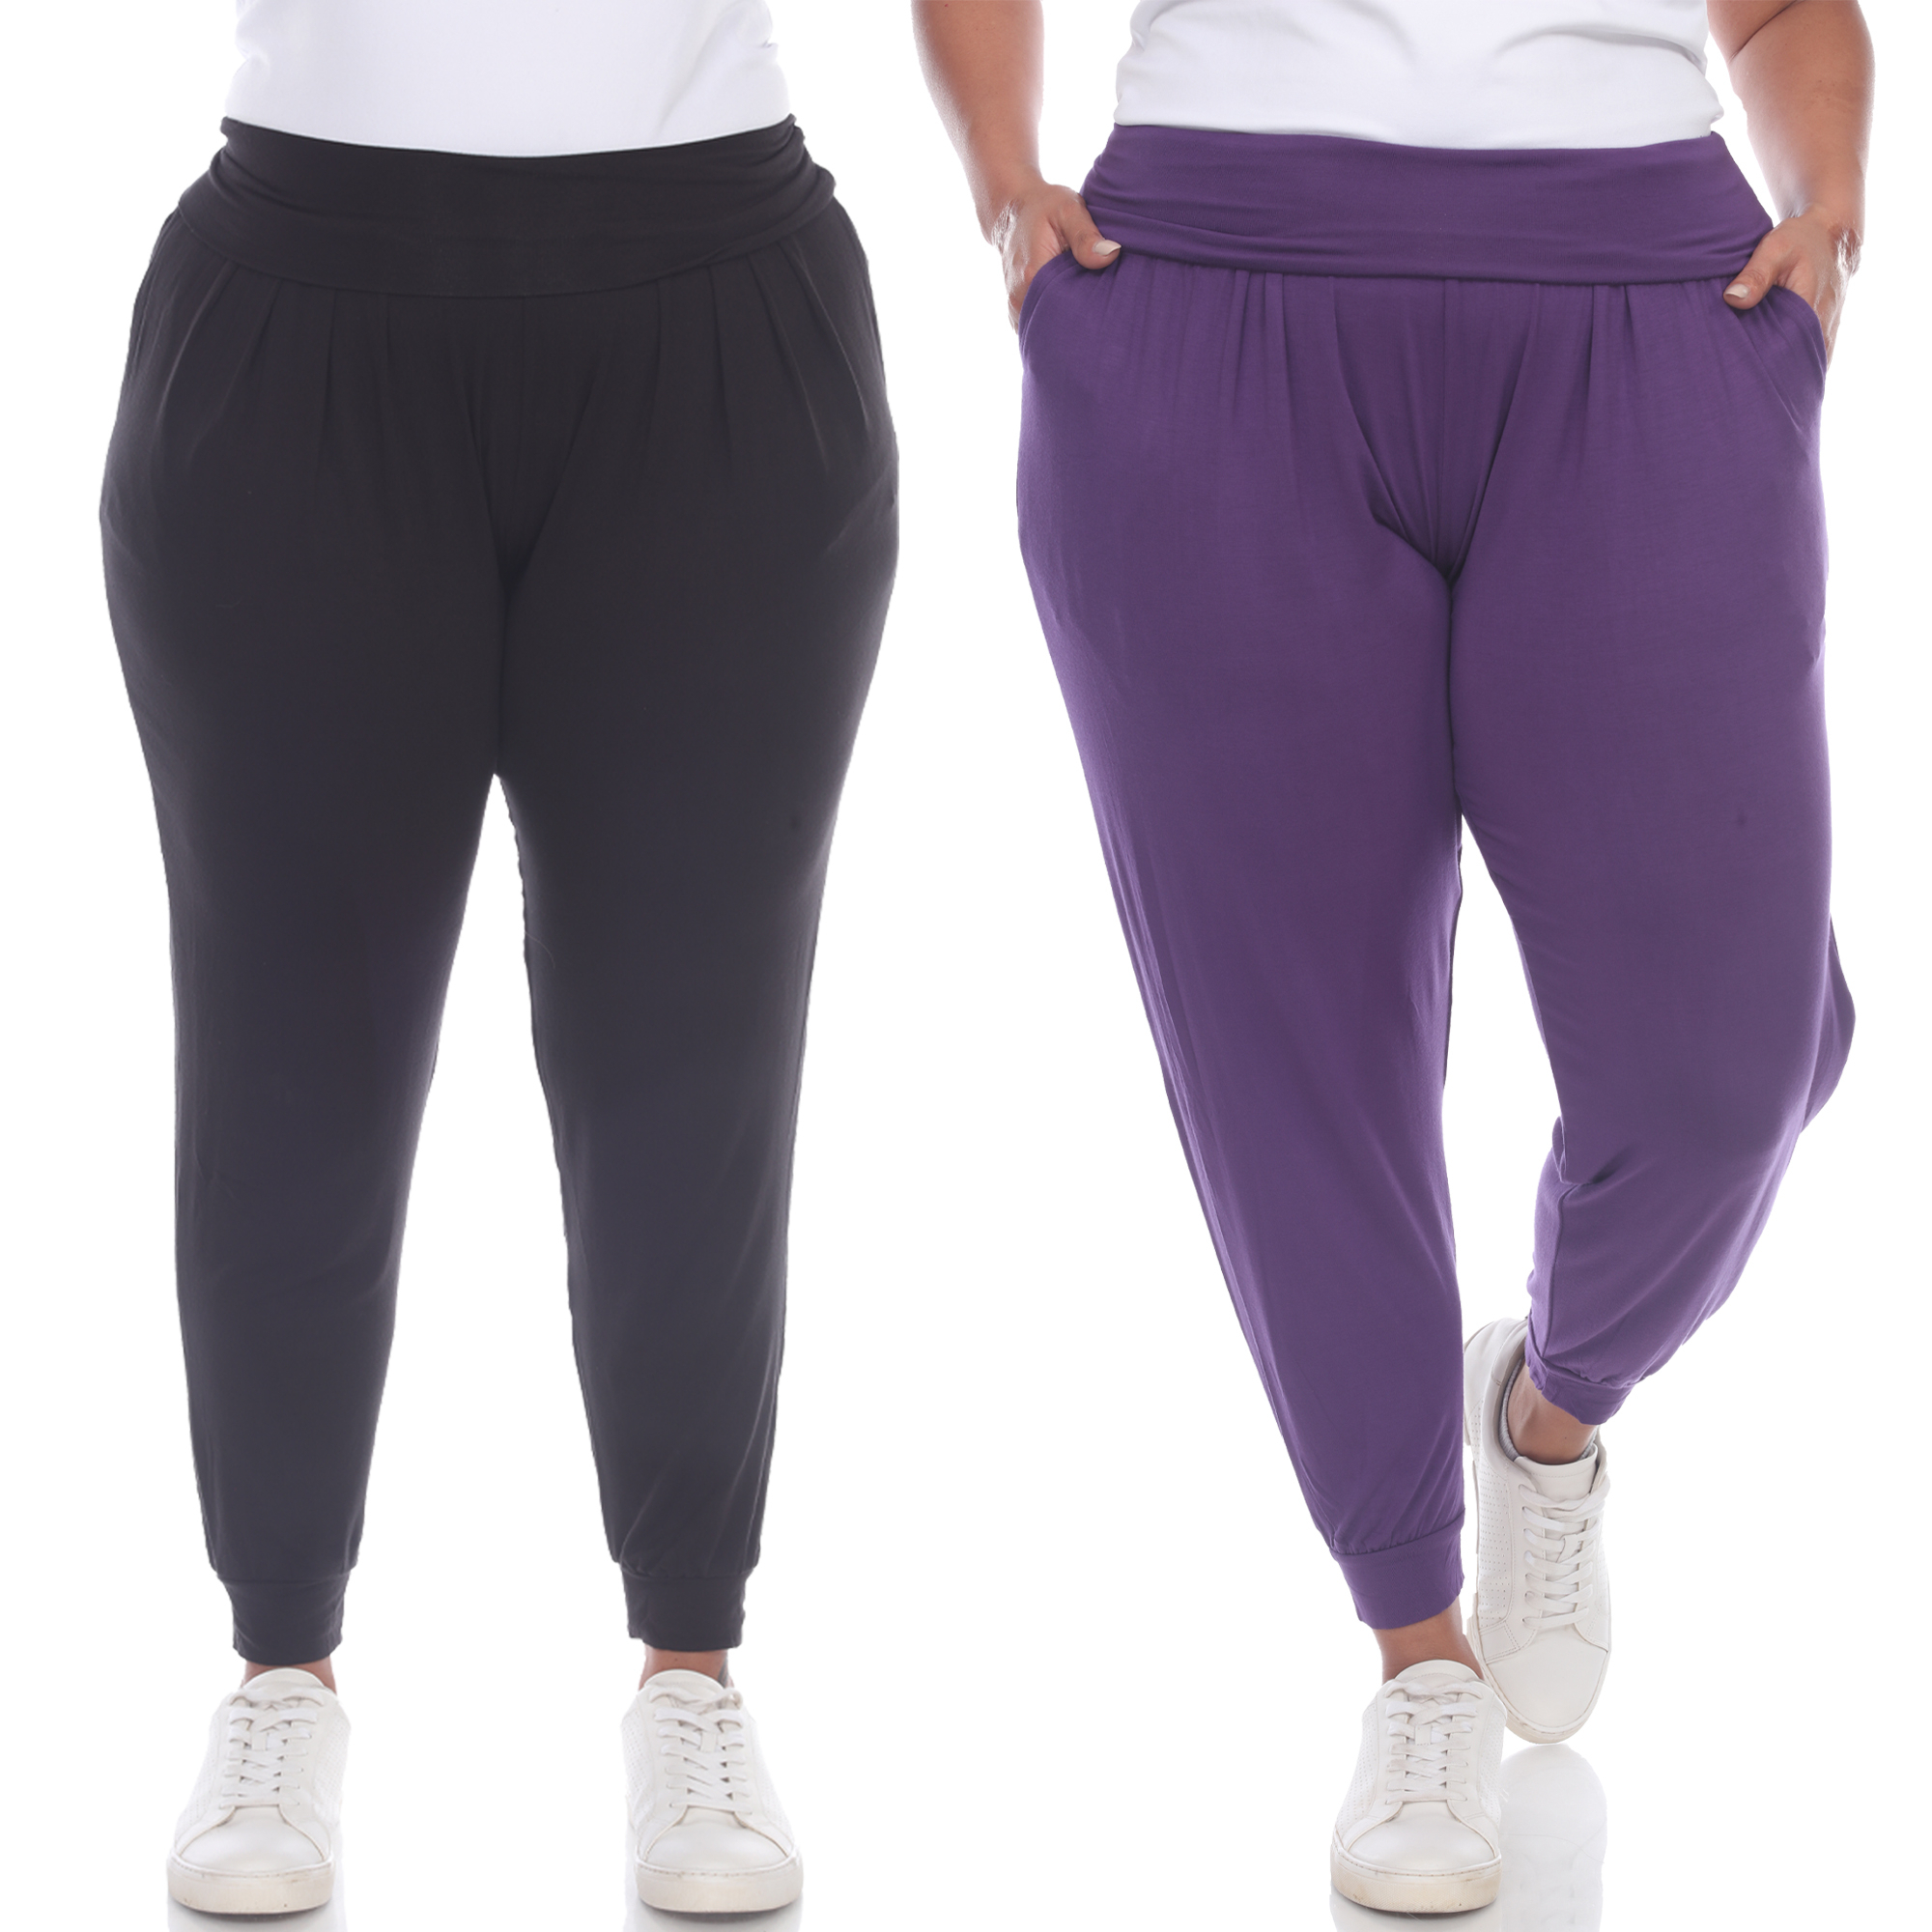 White Mark Women's 2-Pack High Waist Harem Pants - Black, Purple, 3X